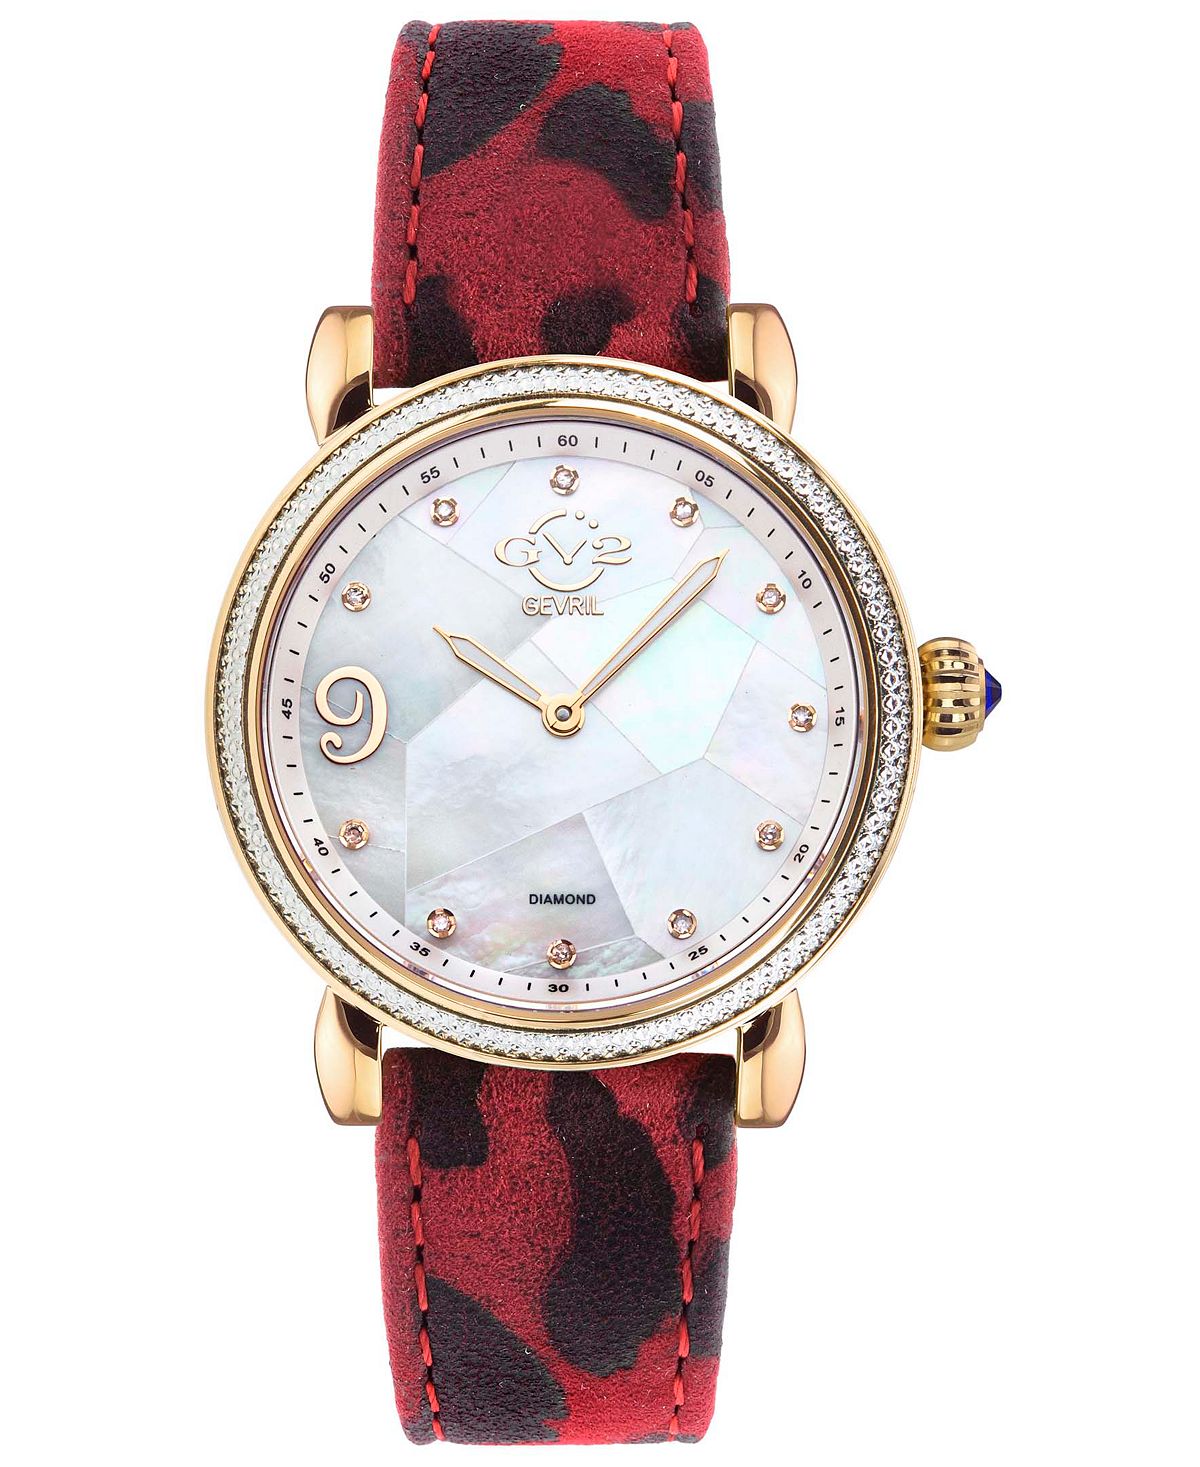 цена Женские часы Ravenna швейцарские кварцевые бордовые кожаные часы 37 мм GV2 by Gevril